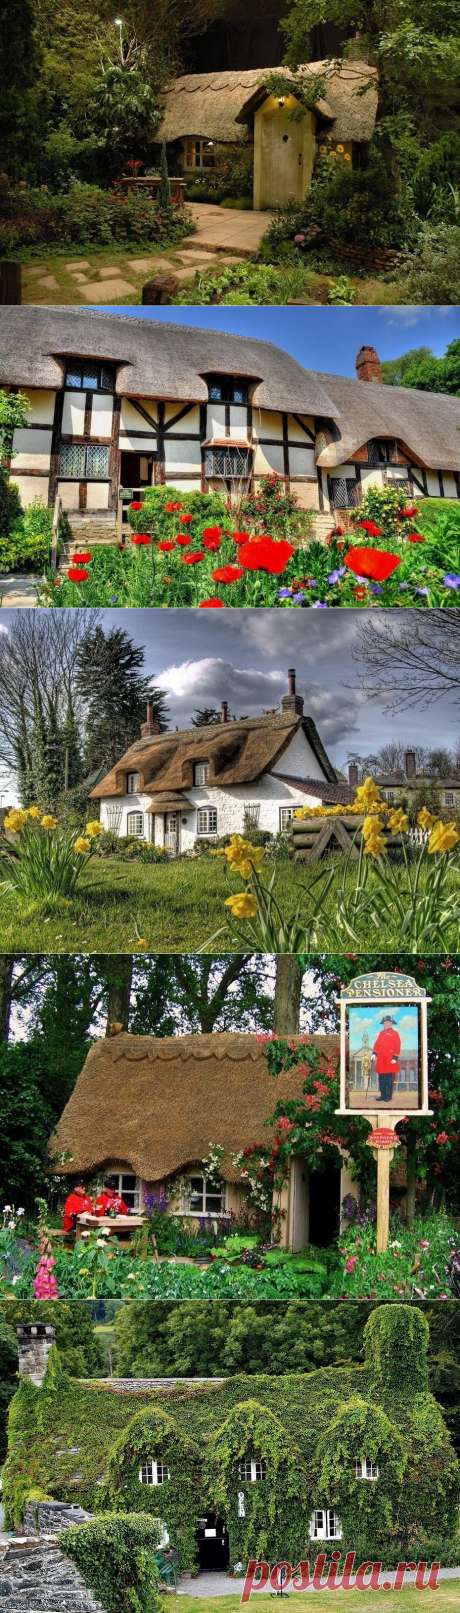 Сказочное графство Девоншир, Англия - Путешествуем вместе